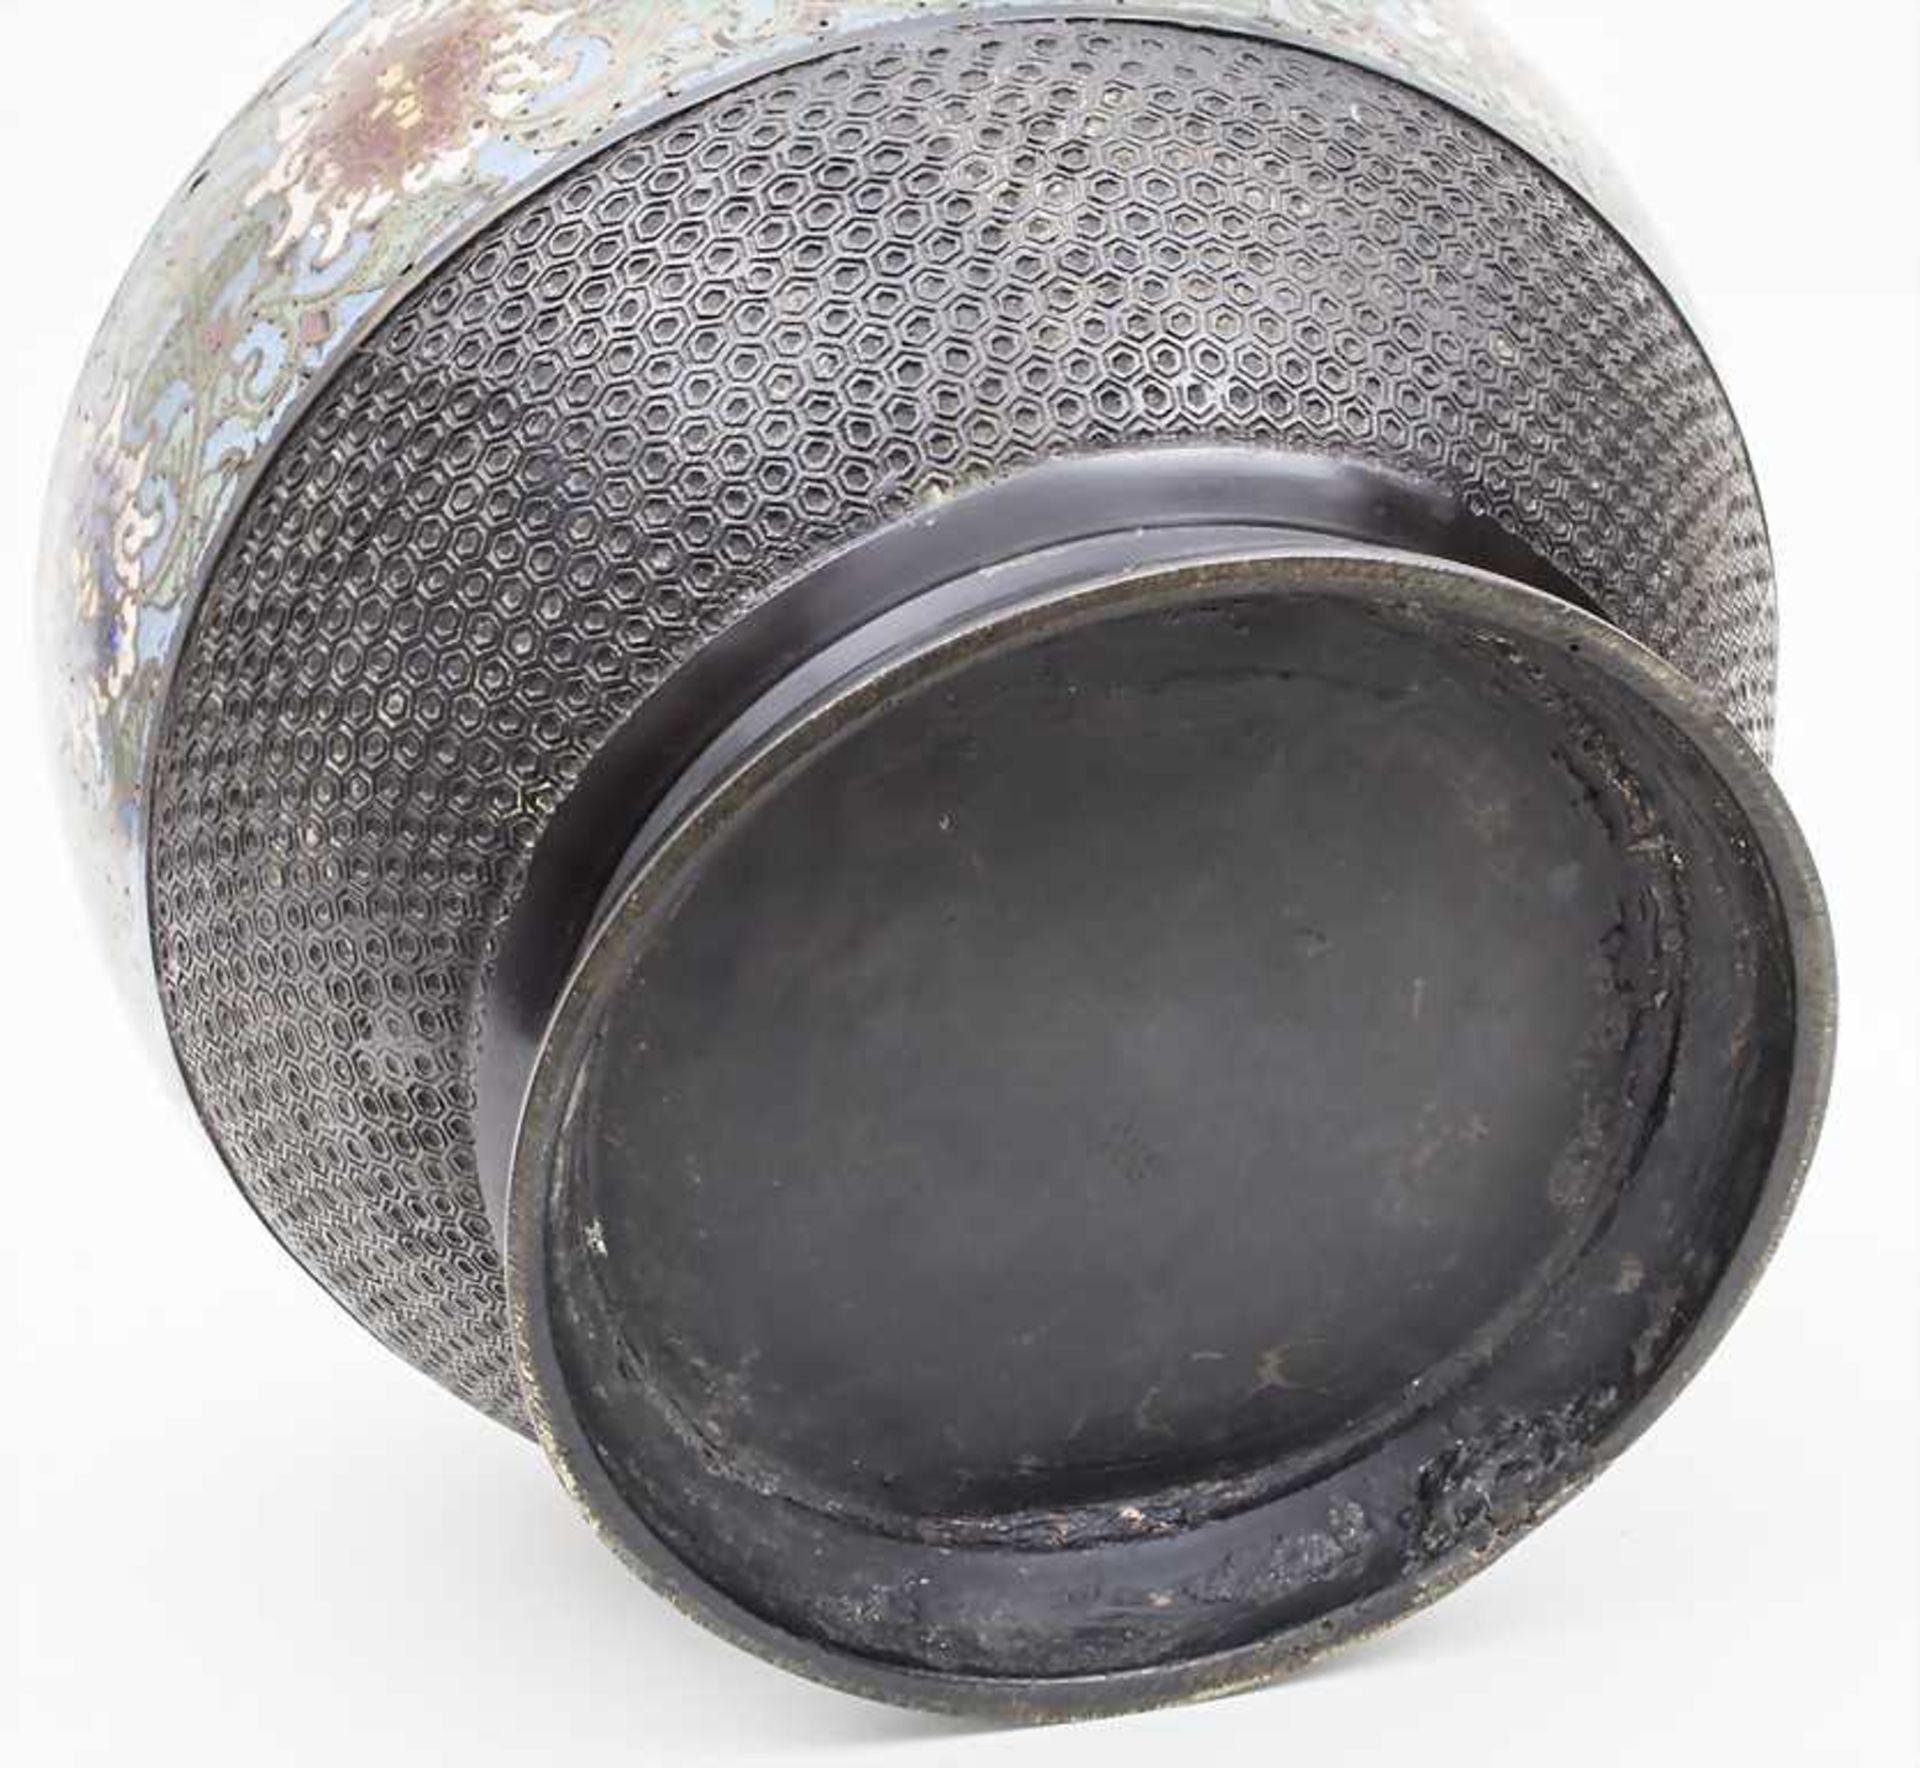 Cachepot, Japan, Meiji-Periode Material: Bronze, Email, Champlevé-Technik,Marke: unters. - Image 2 of 2